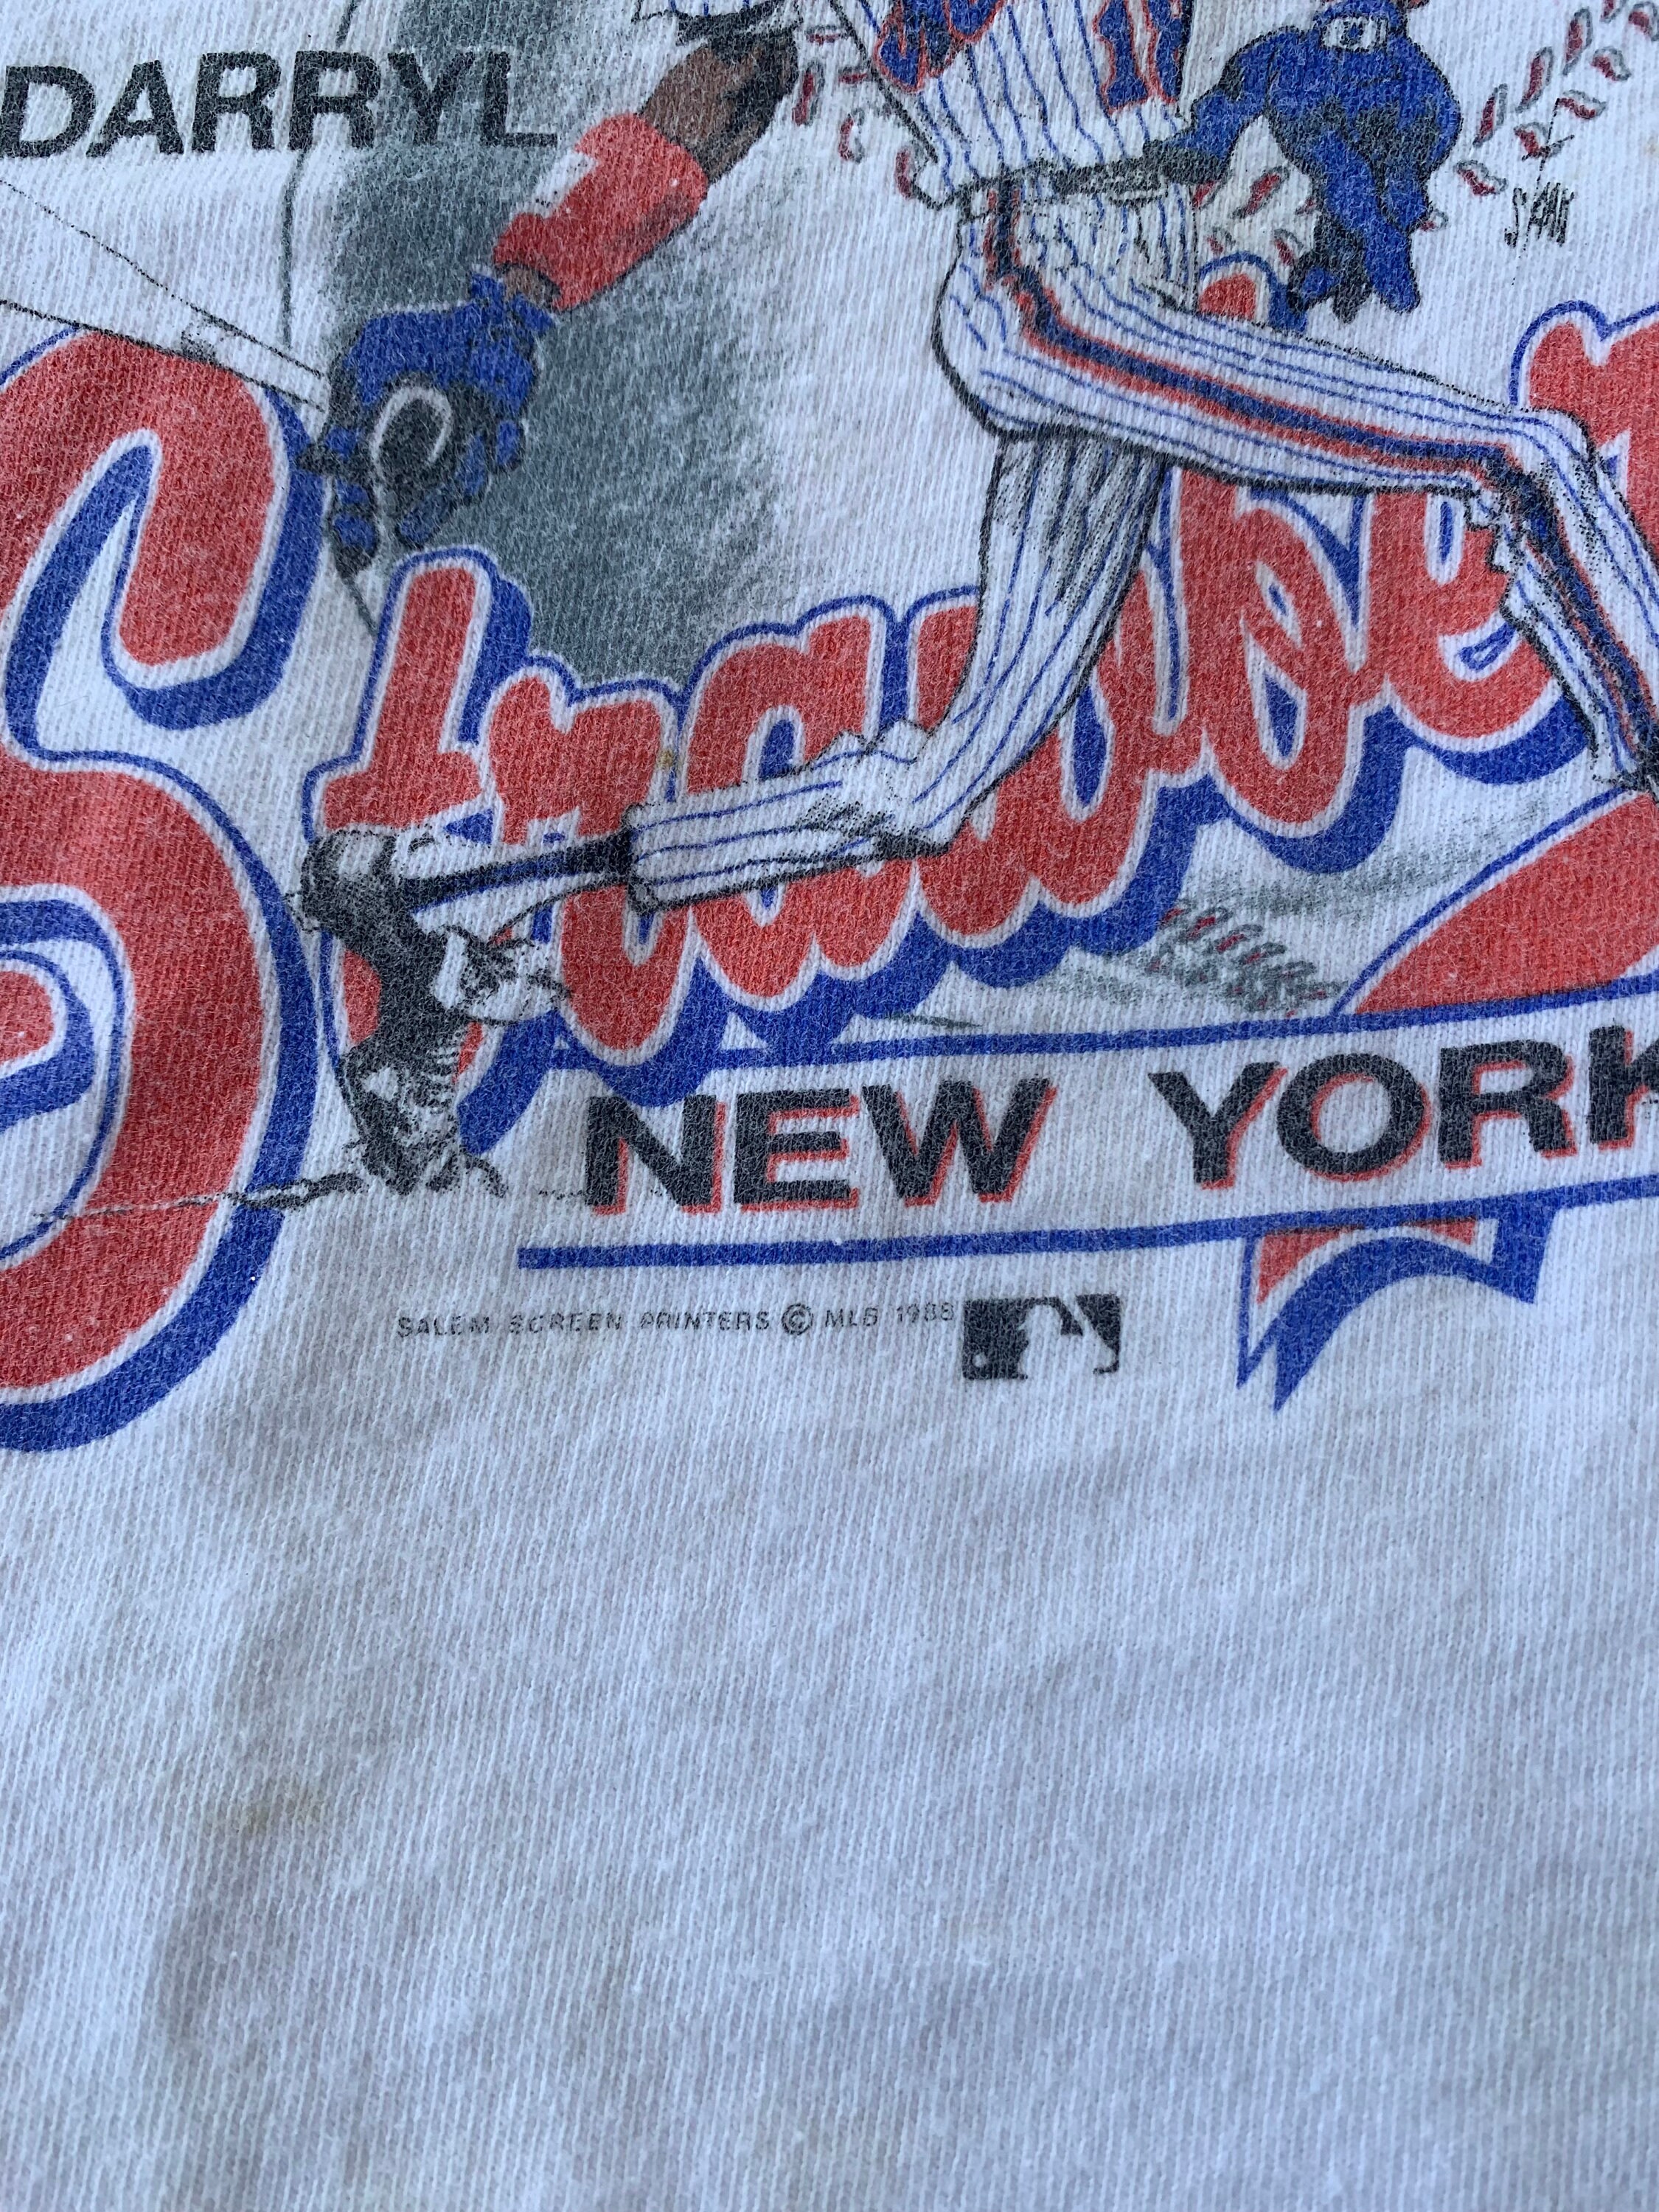 Throwback New York Mets Darryl Strawberry #18 Mens Large Baseball